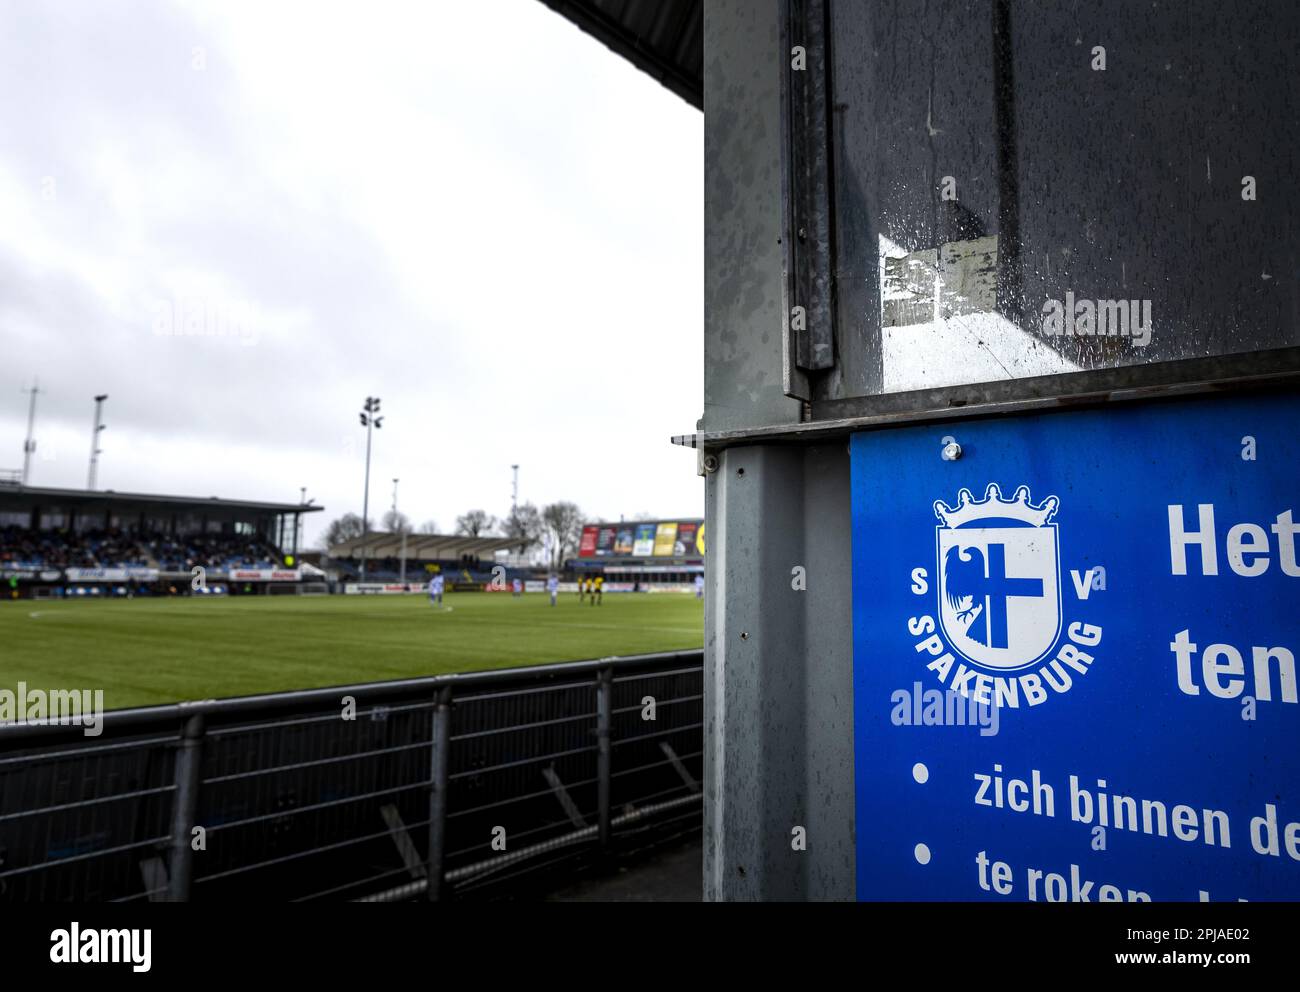 SPAKENBURG - Parco sportivo de Westmaat di SV Spakenburg. Spakenburg ha stordito nei quarti di finale della KNVB Cup eliminando il FC Utrecht 4-1. ANP REMKO DE WAAL netherlands out - belgium out Credit: ANP/Alamy Live News Foto Stock